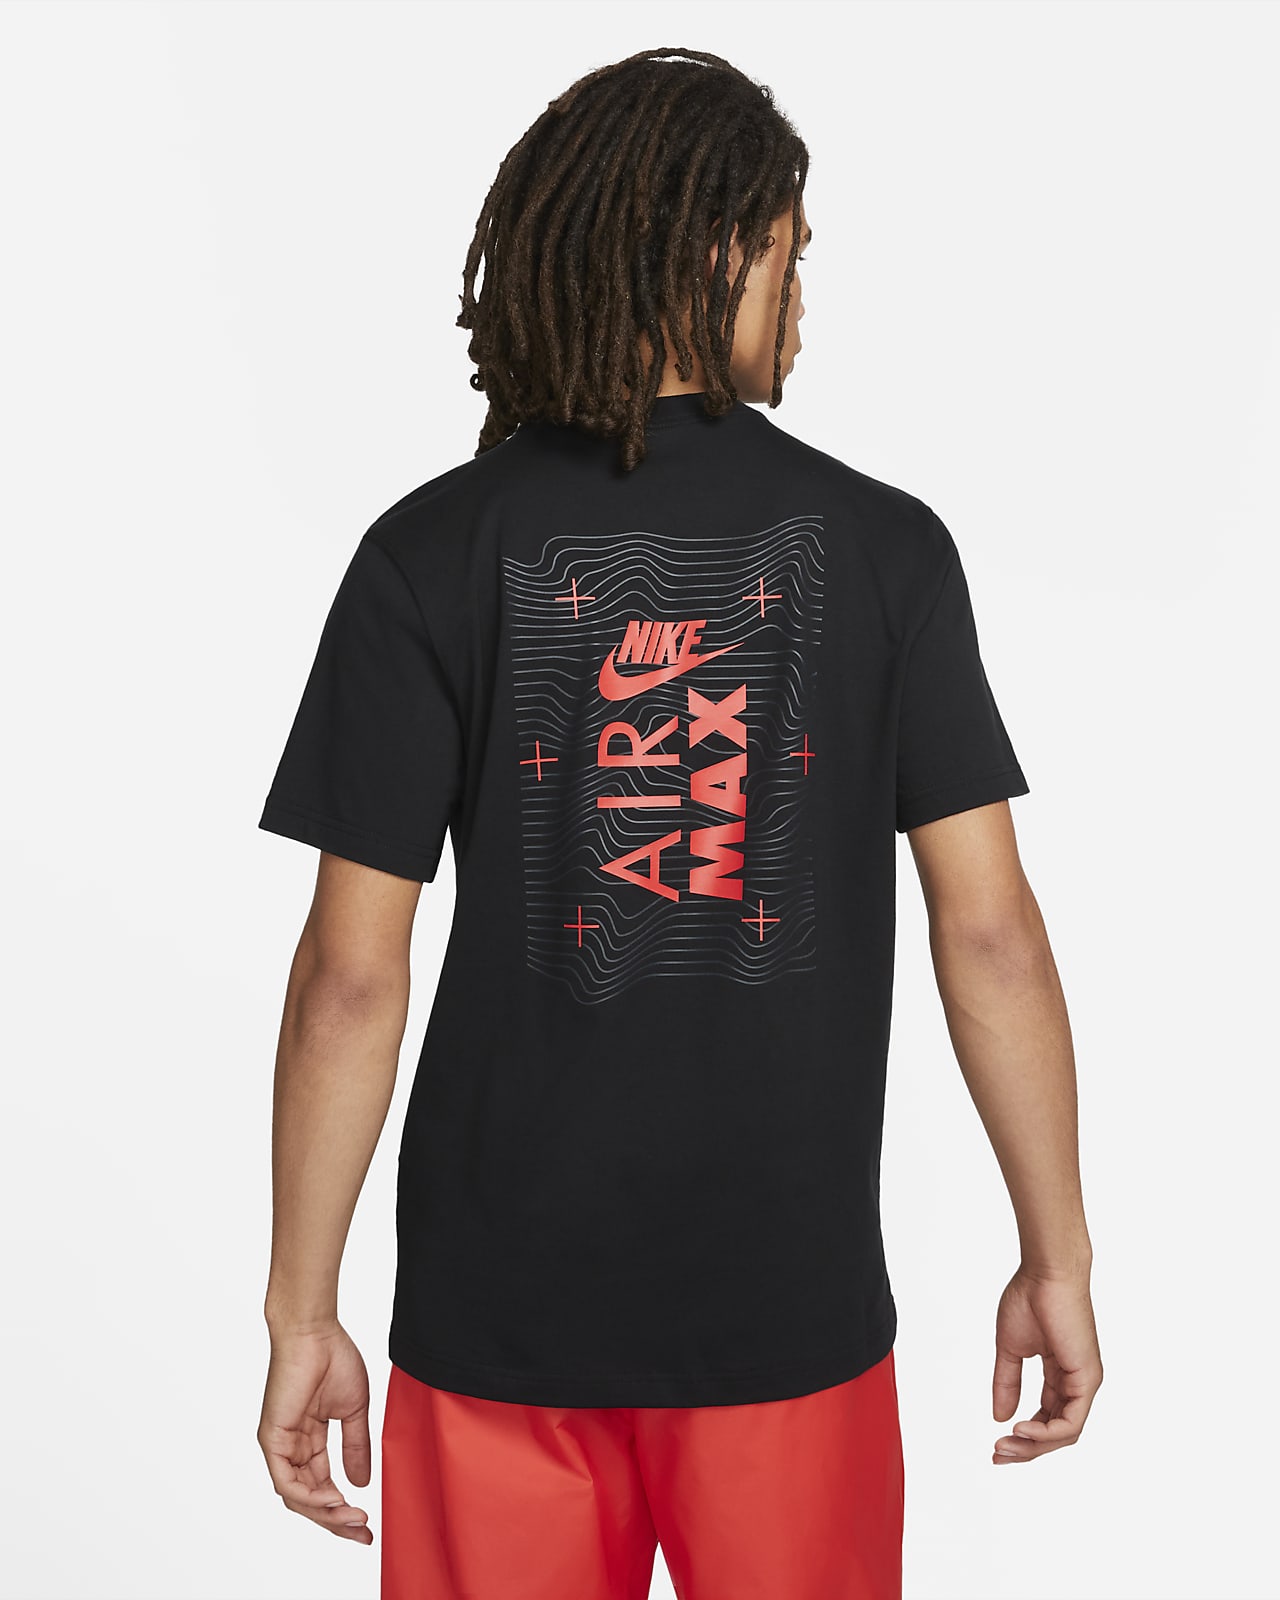 Nike Sportswear Air Max Men's T-Shirt. Nike AT